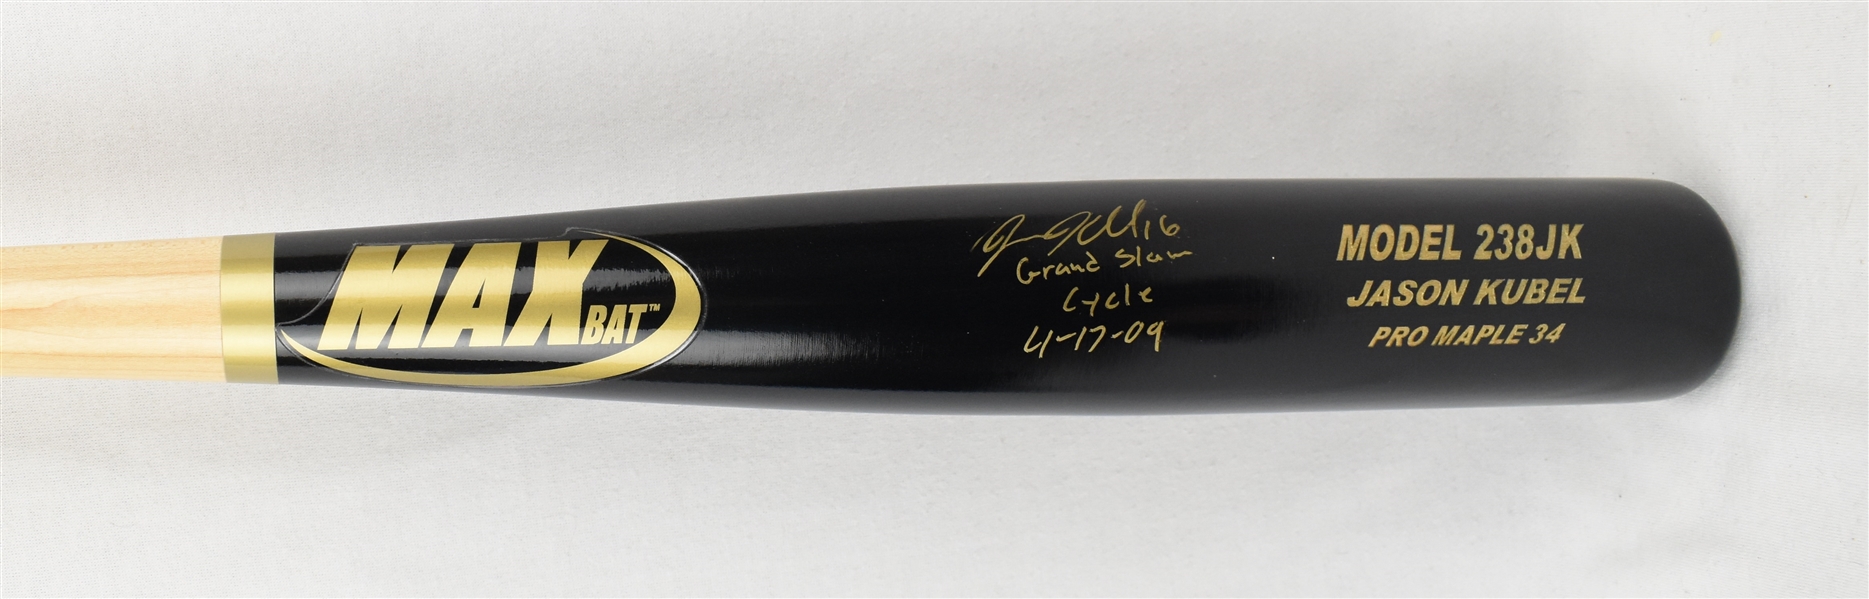 Jason Kubel Autographed & Inscribed Bat